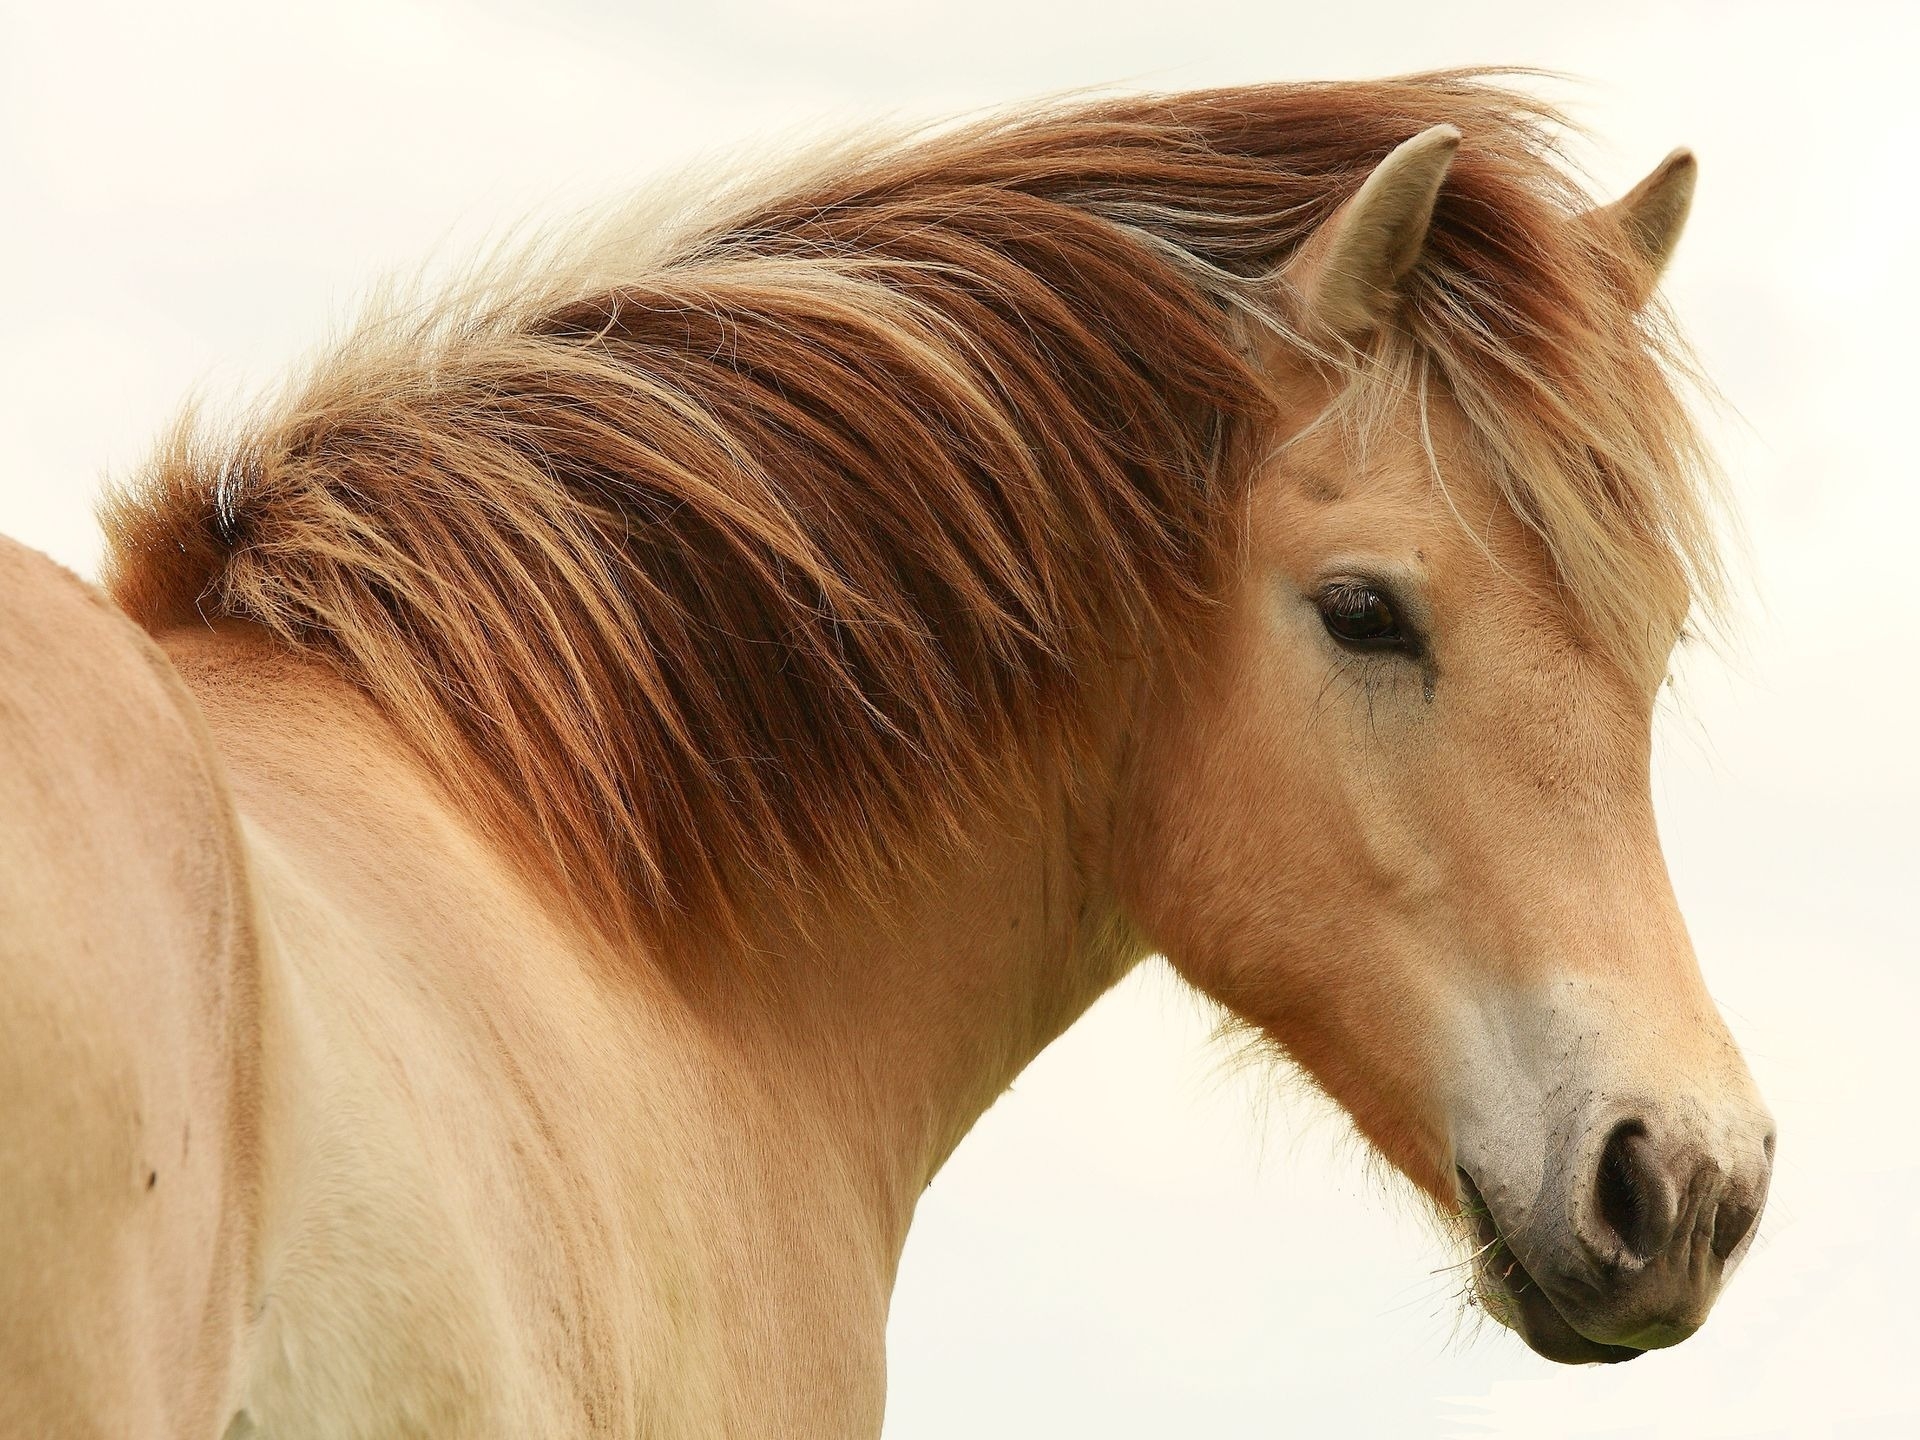 111795 descargar imagen animales, melena, caballo, beige, semental: fondos de pantalla y protectores de pantalla gratis